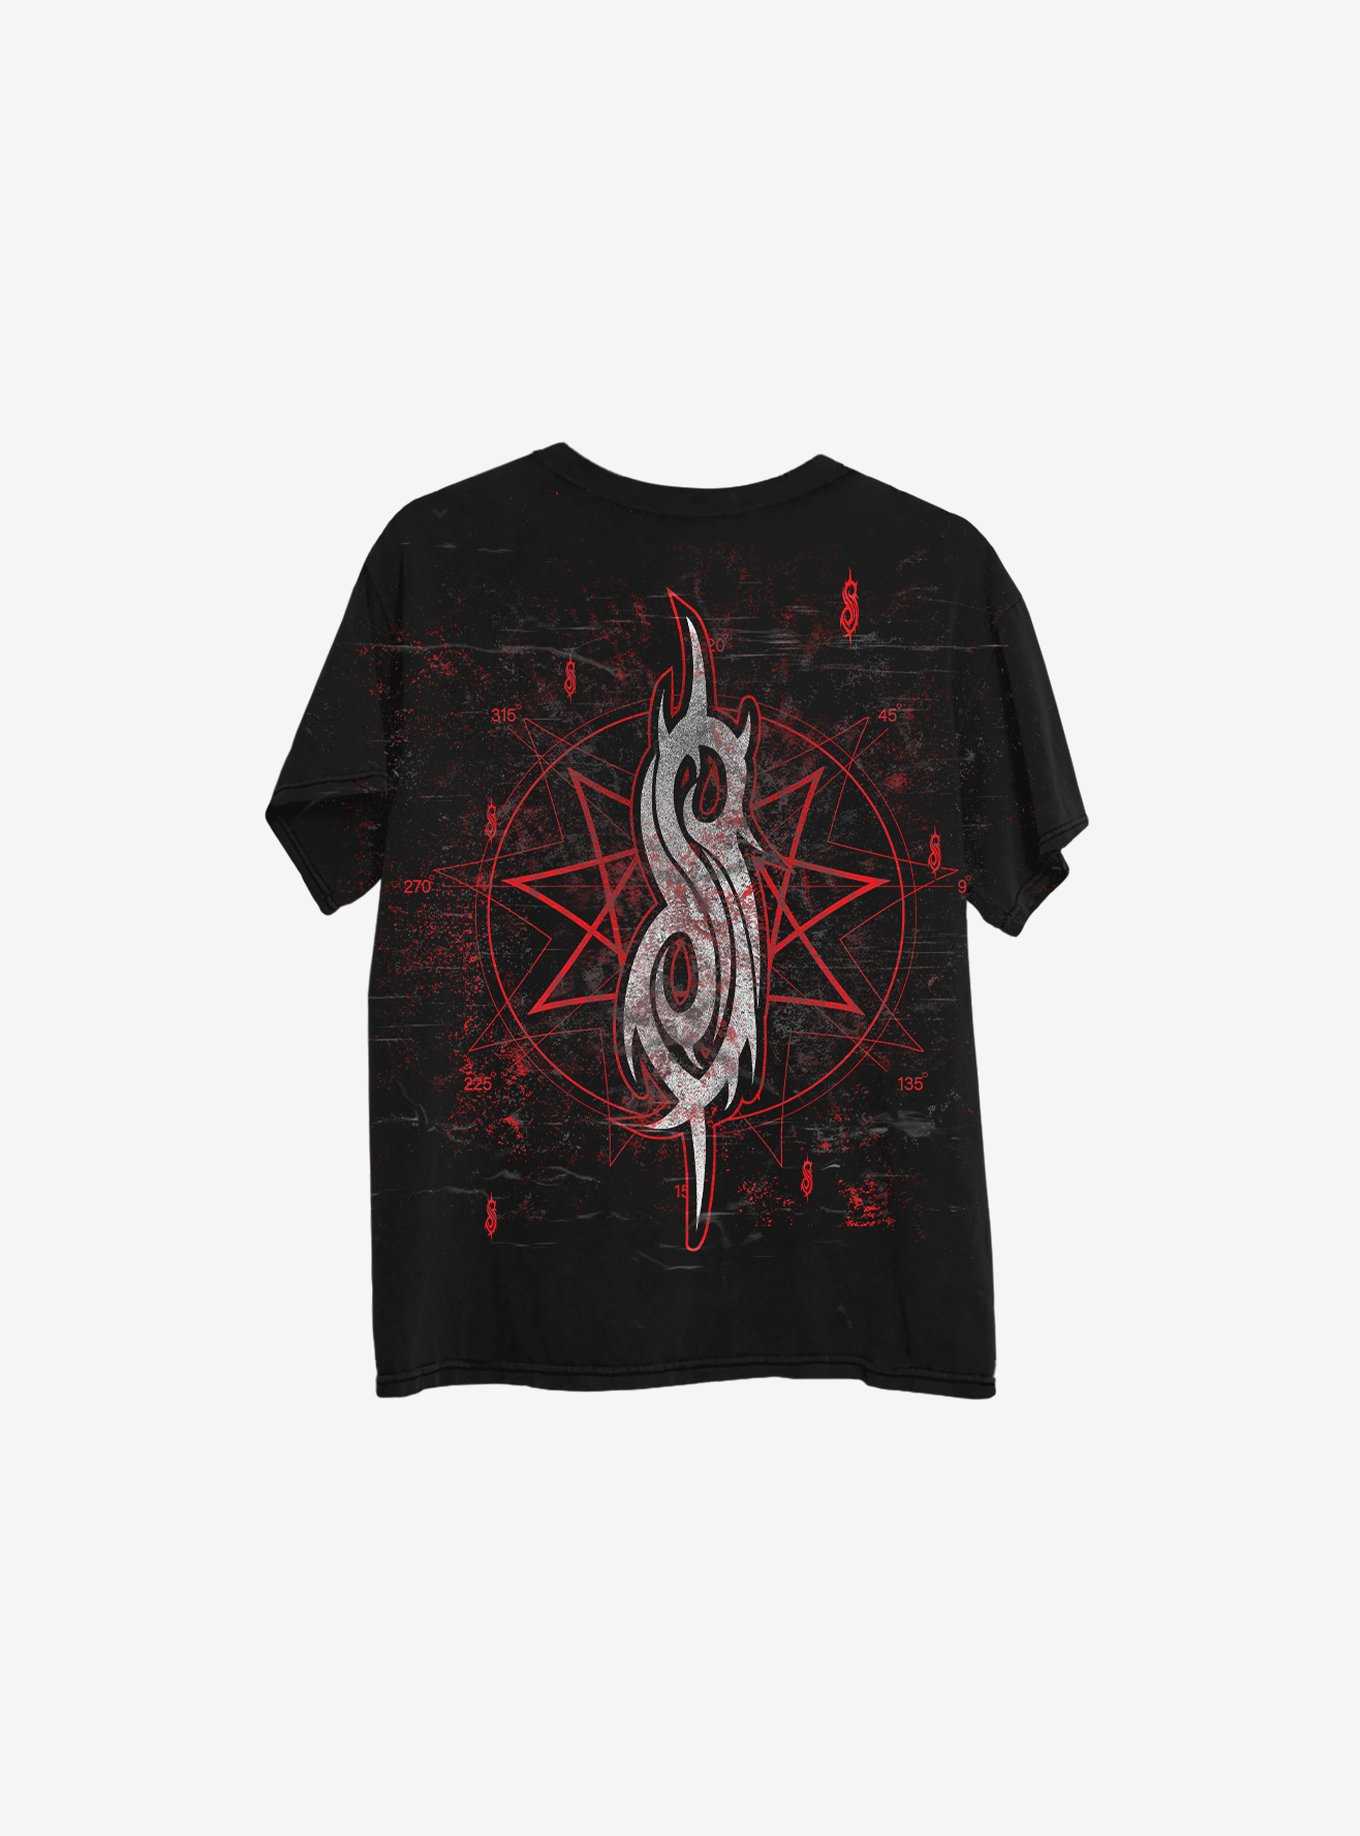 Slipknot Logo Boyfriend Fit Girls T-Shirt, , hi-res